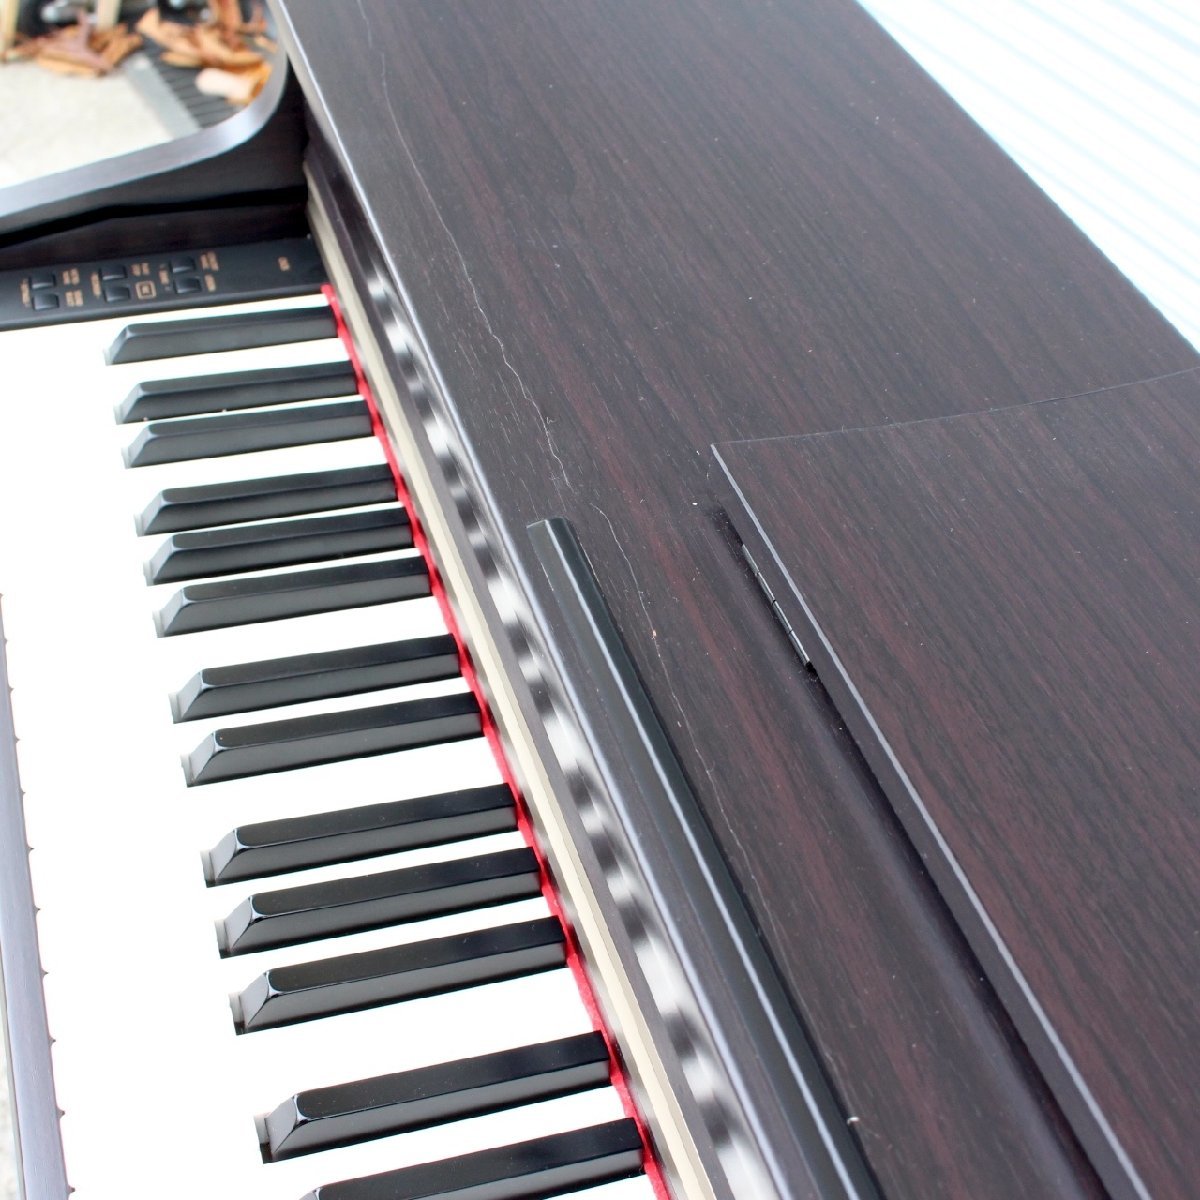 T605)【東京・神奈川限定配送】KAWAI 電子ピアノ 2015年製 CN25R 88鍵 音色数19 チェア付き 一番右ペダル反応なし KAWAI 直取歓迎 デジタル_画像4